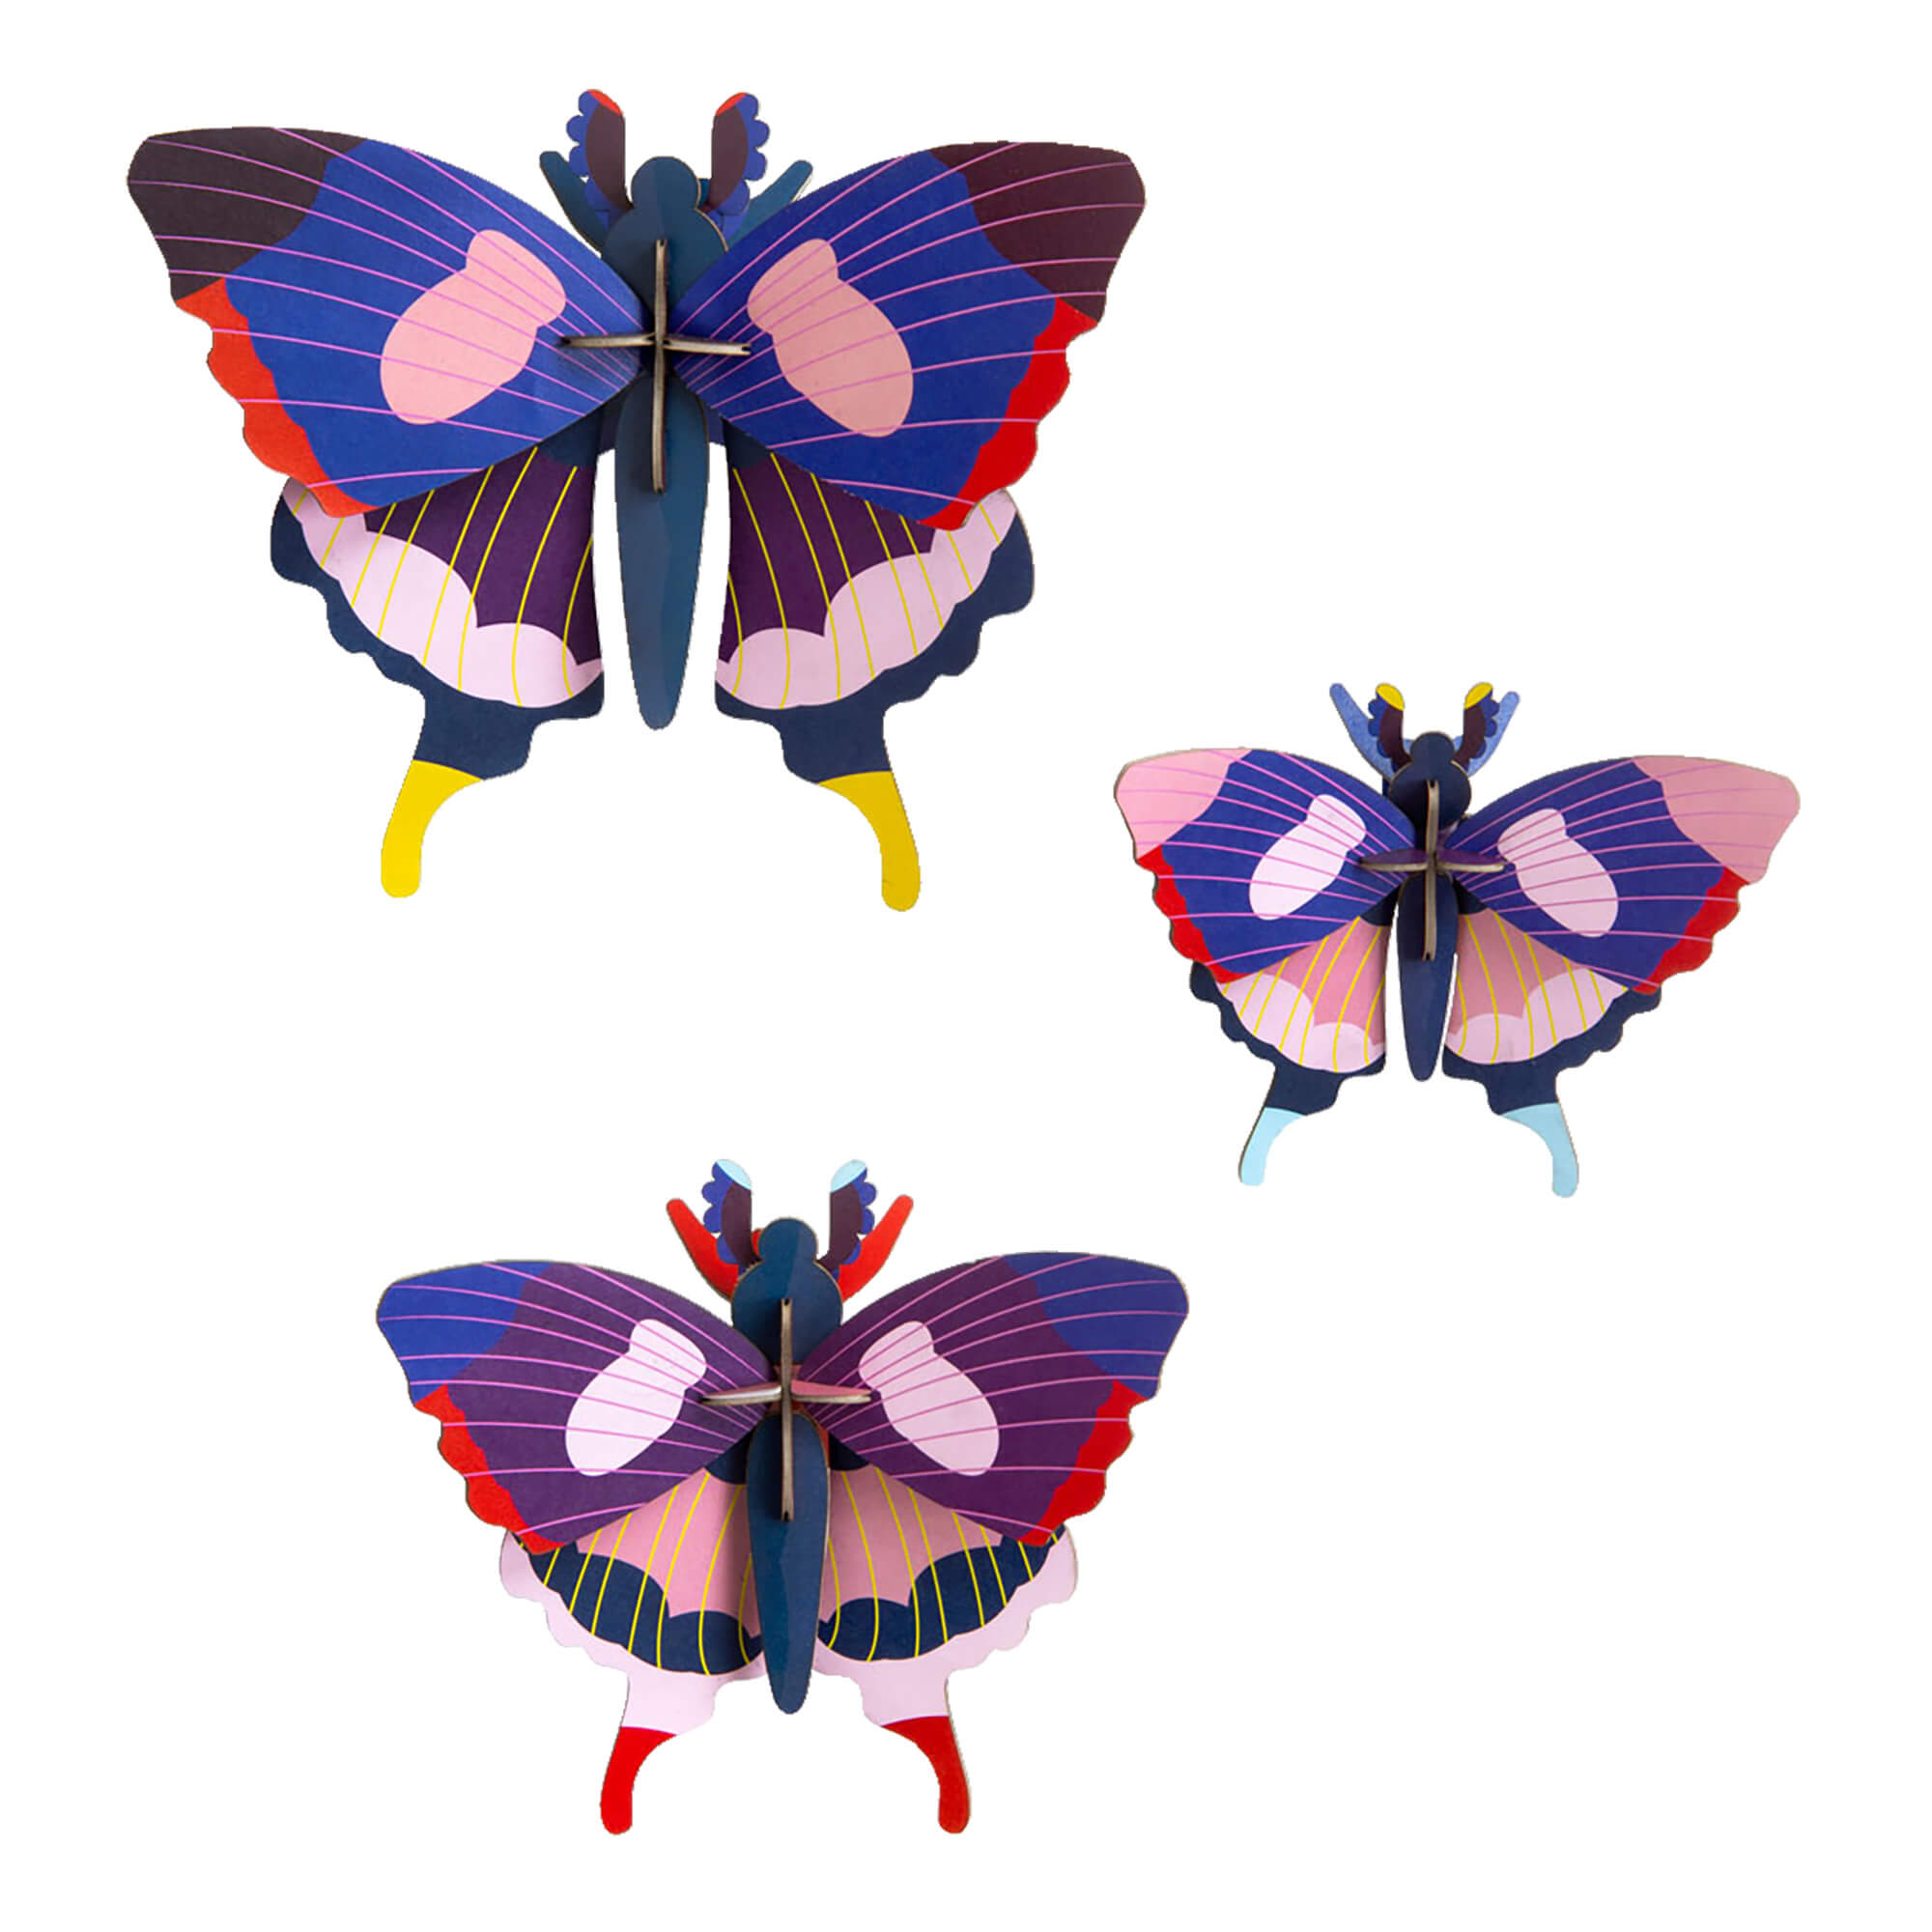 Décoration murale Trio de Papillons Queue d'aronde en Carton recyclé